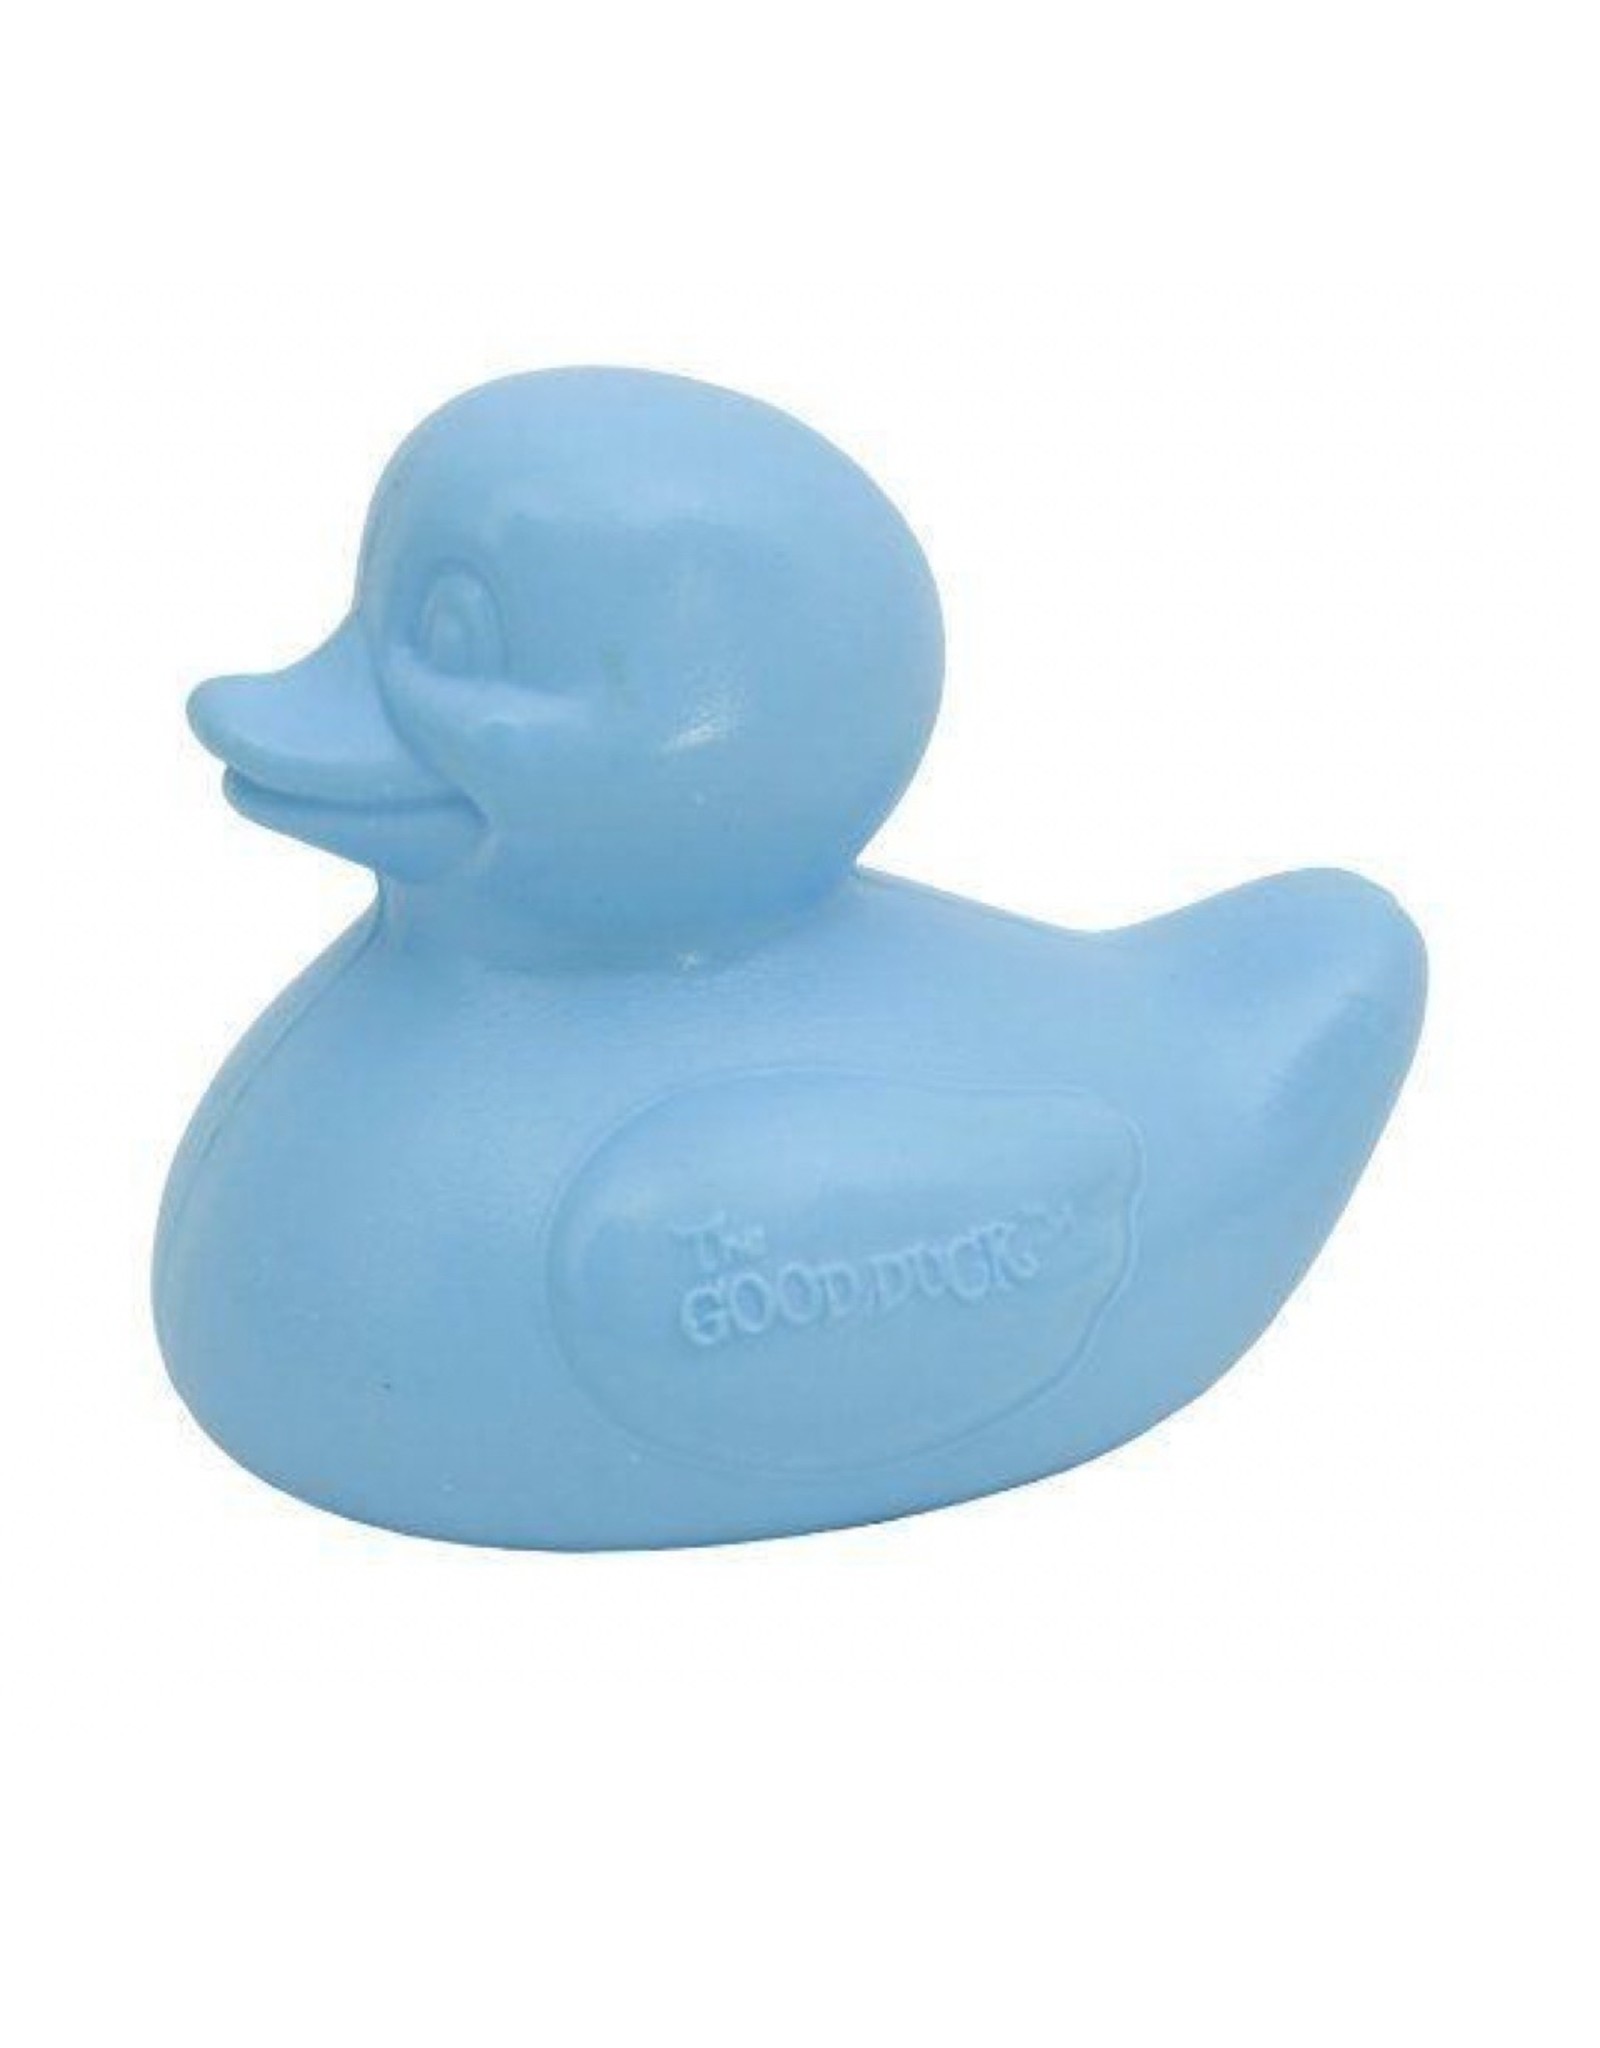 The Good Duck - Safest Rubber Duck for Babies - Blue